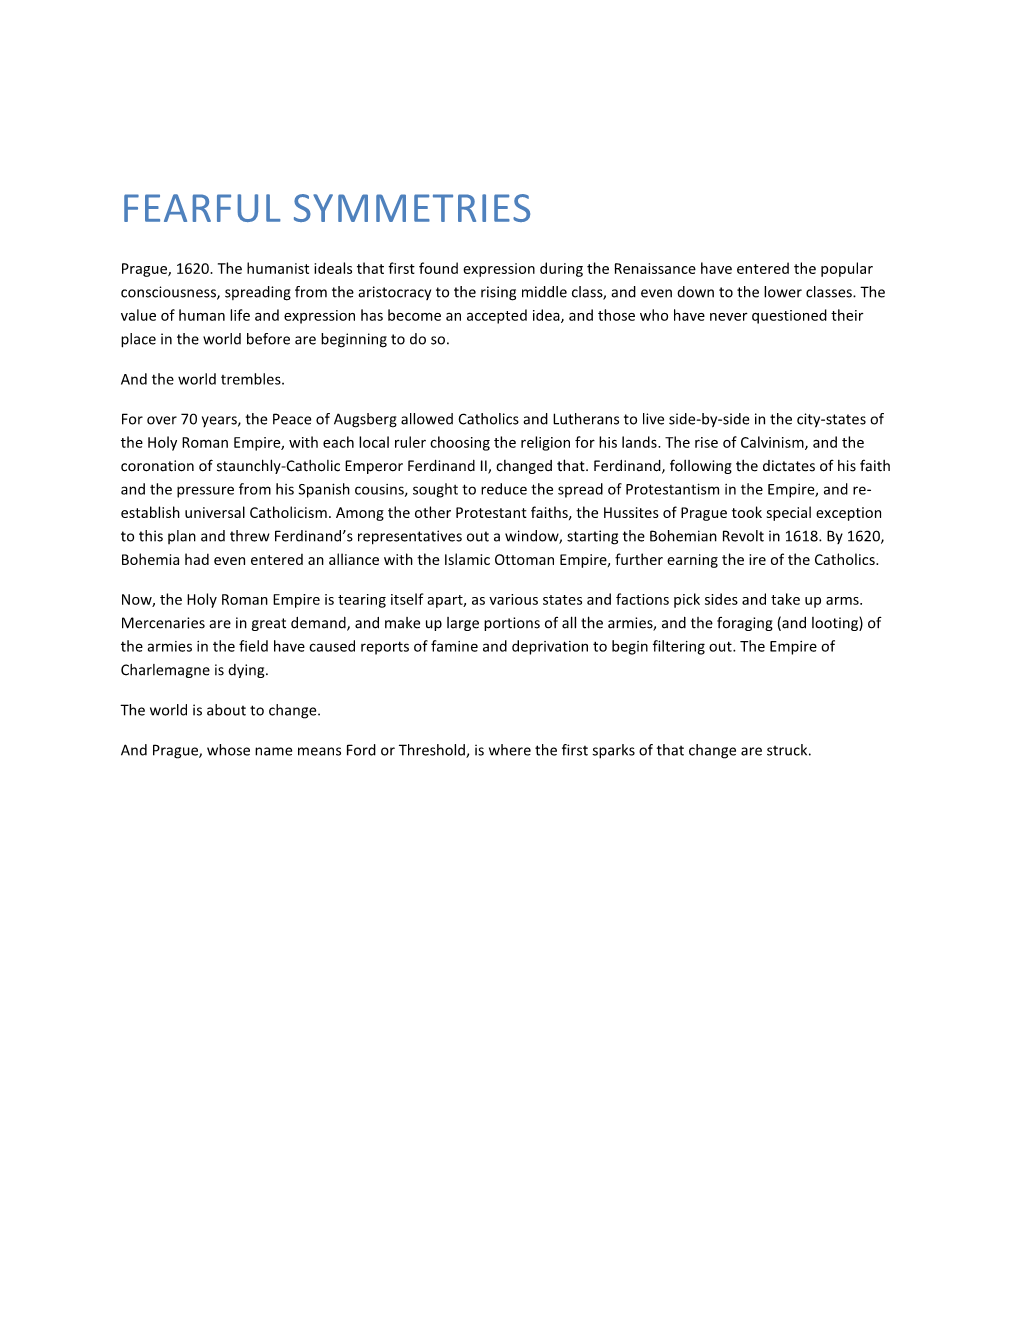 Fearful Symmetries